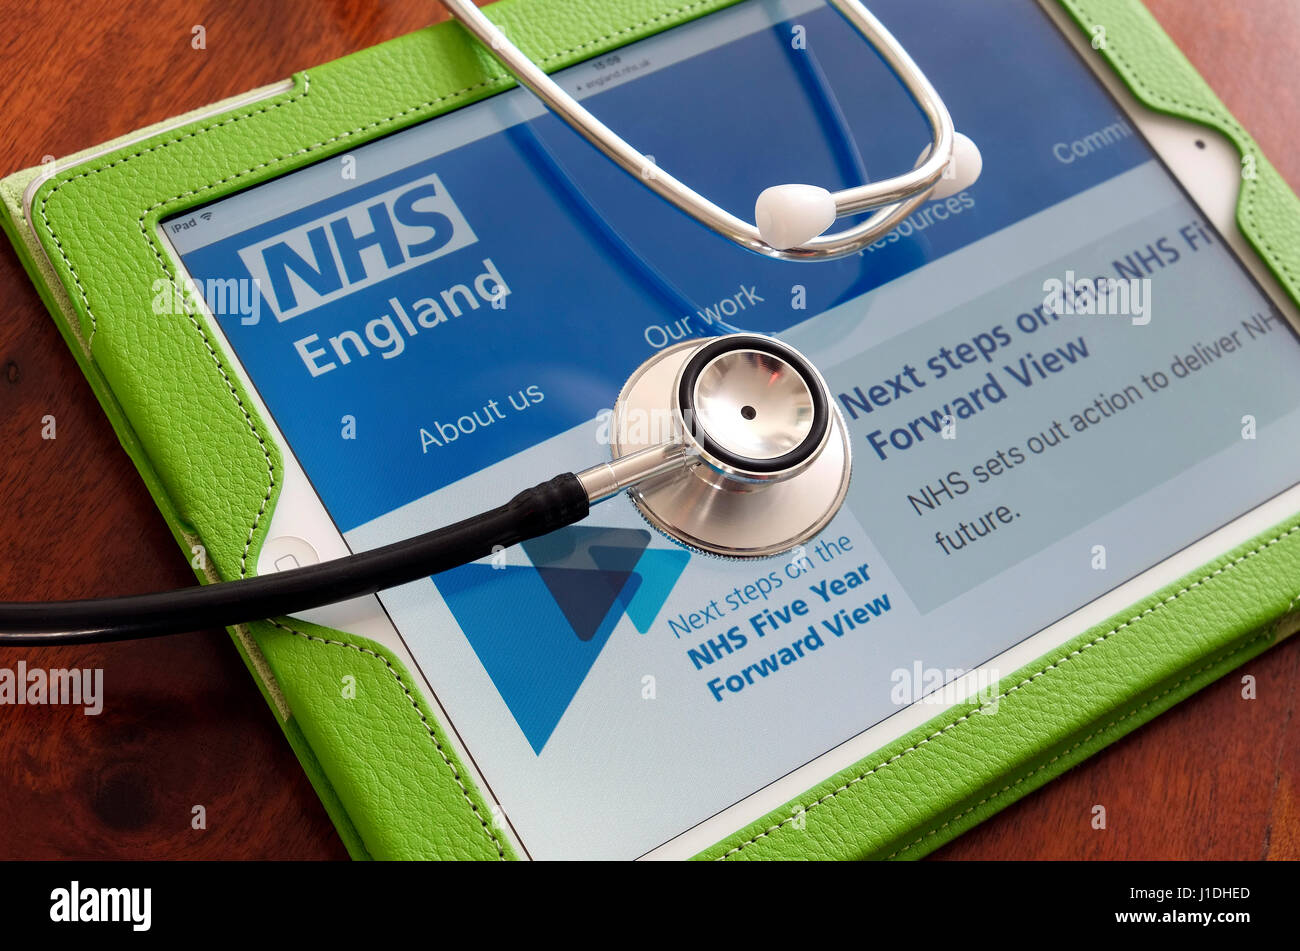 NHS-Webseite auf dem Ipad Tablet PC Stockfoto